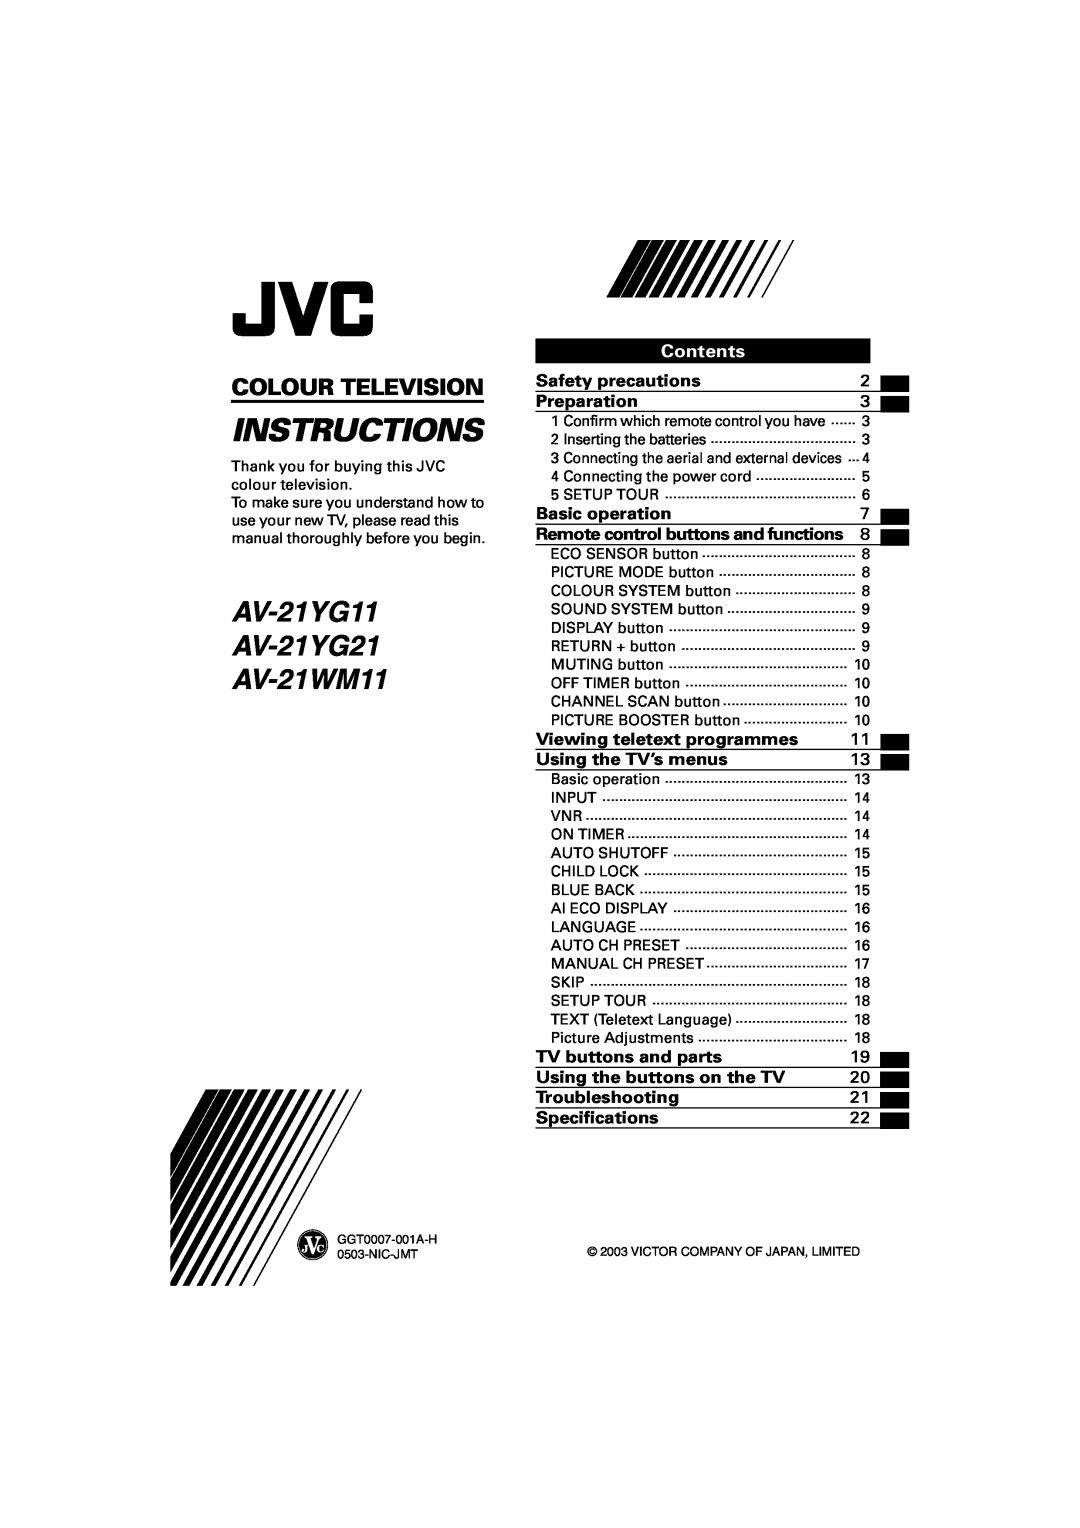 JVC AV-21YG11, AV-21YG21, AV-21WM11 specifications Safety precautions, Preparation, Basic operation, Using the TV’s menus 